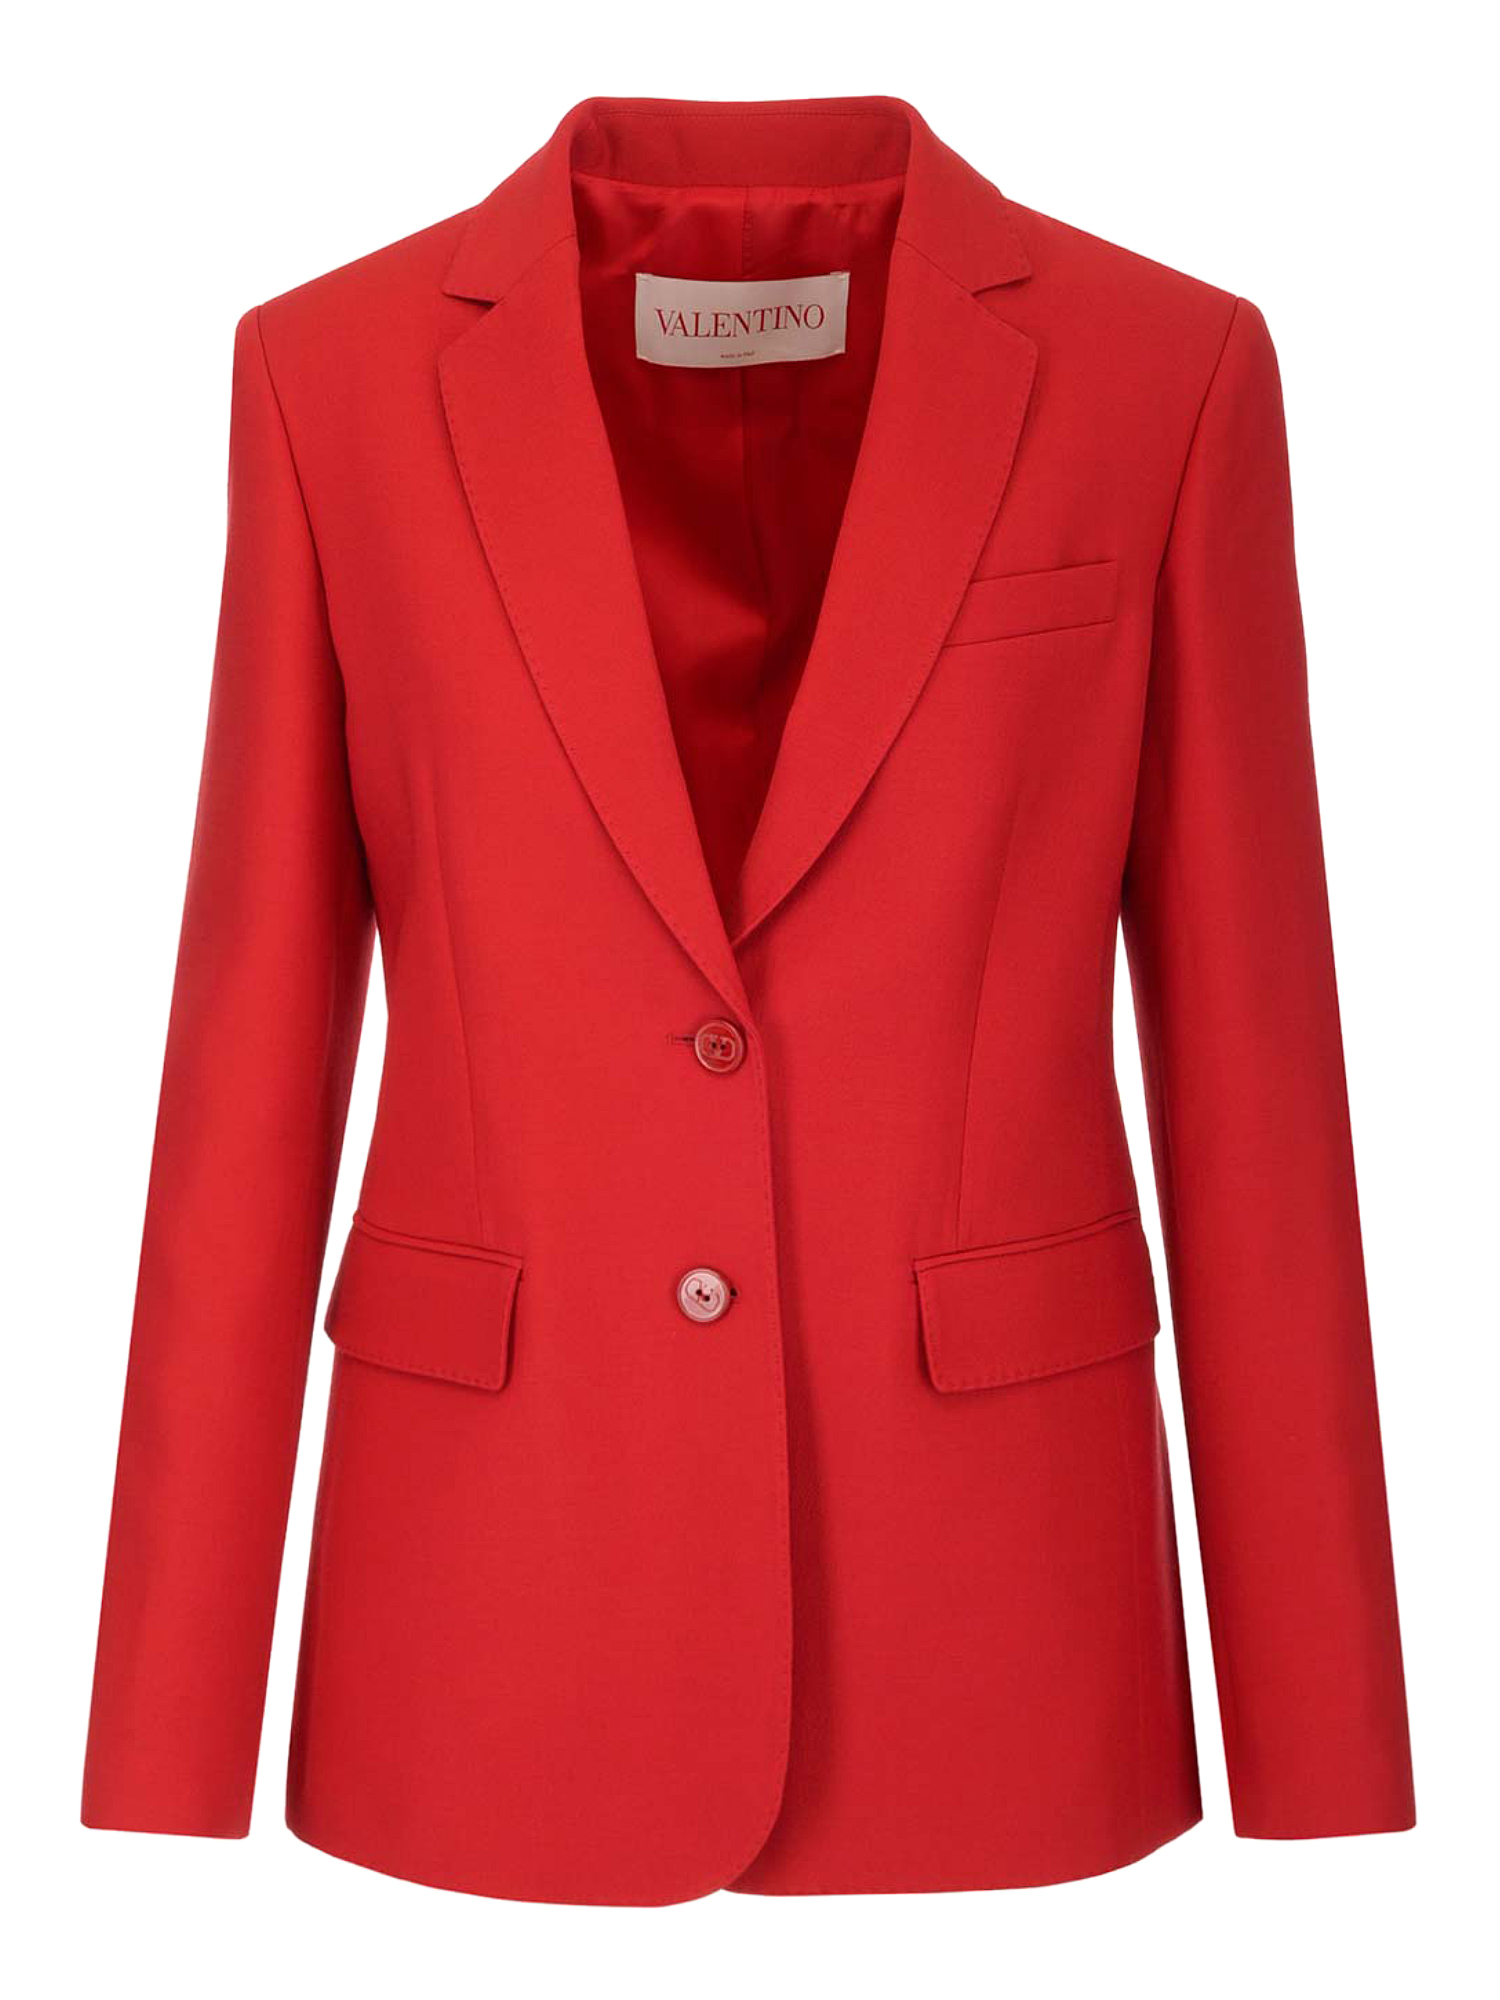 Vestes Pour Femme - Valentino - En Wool Red - Taille:  -